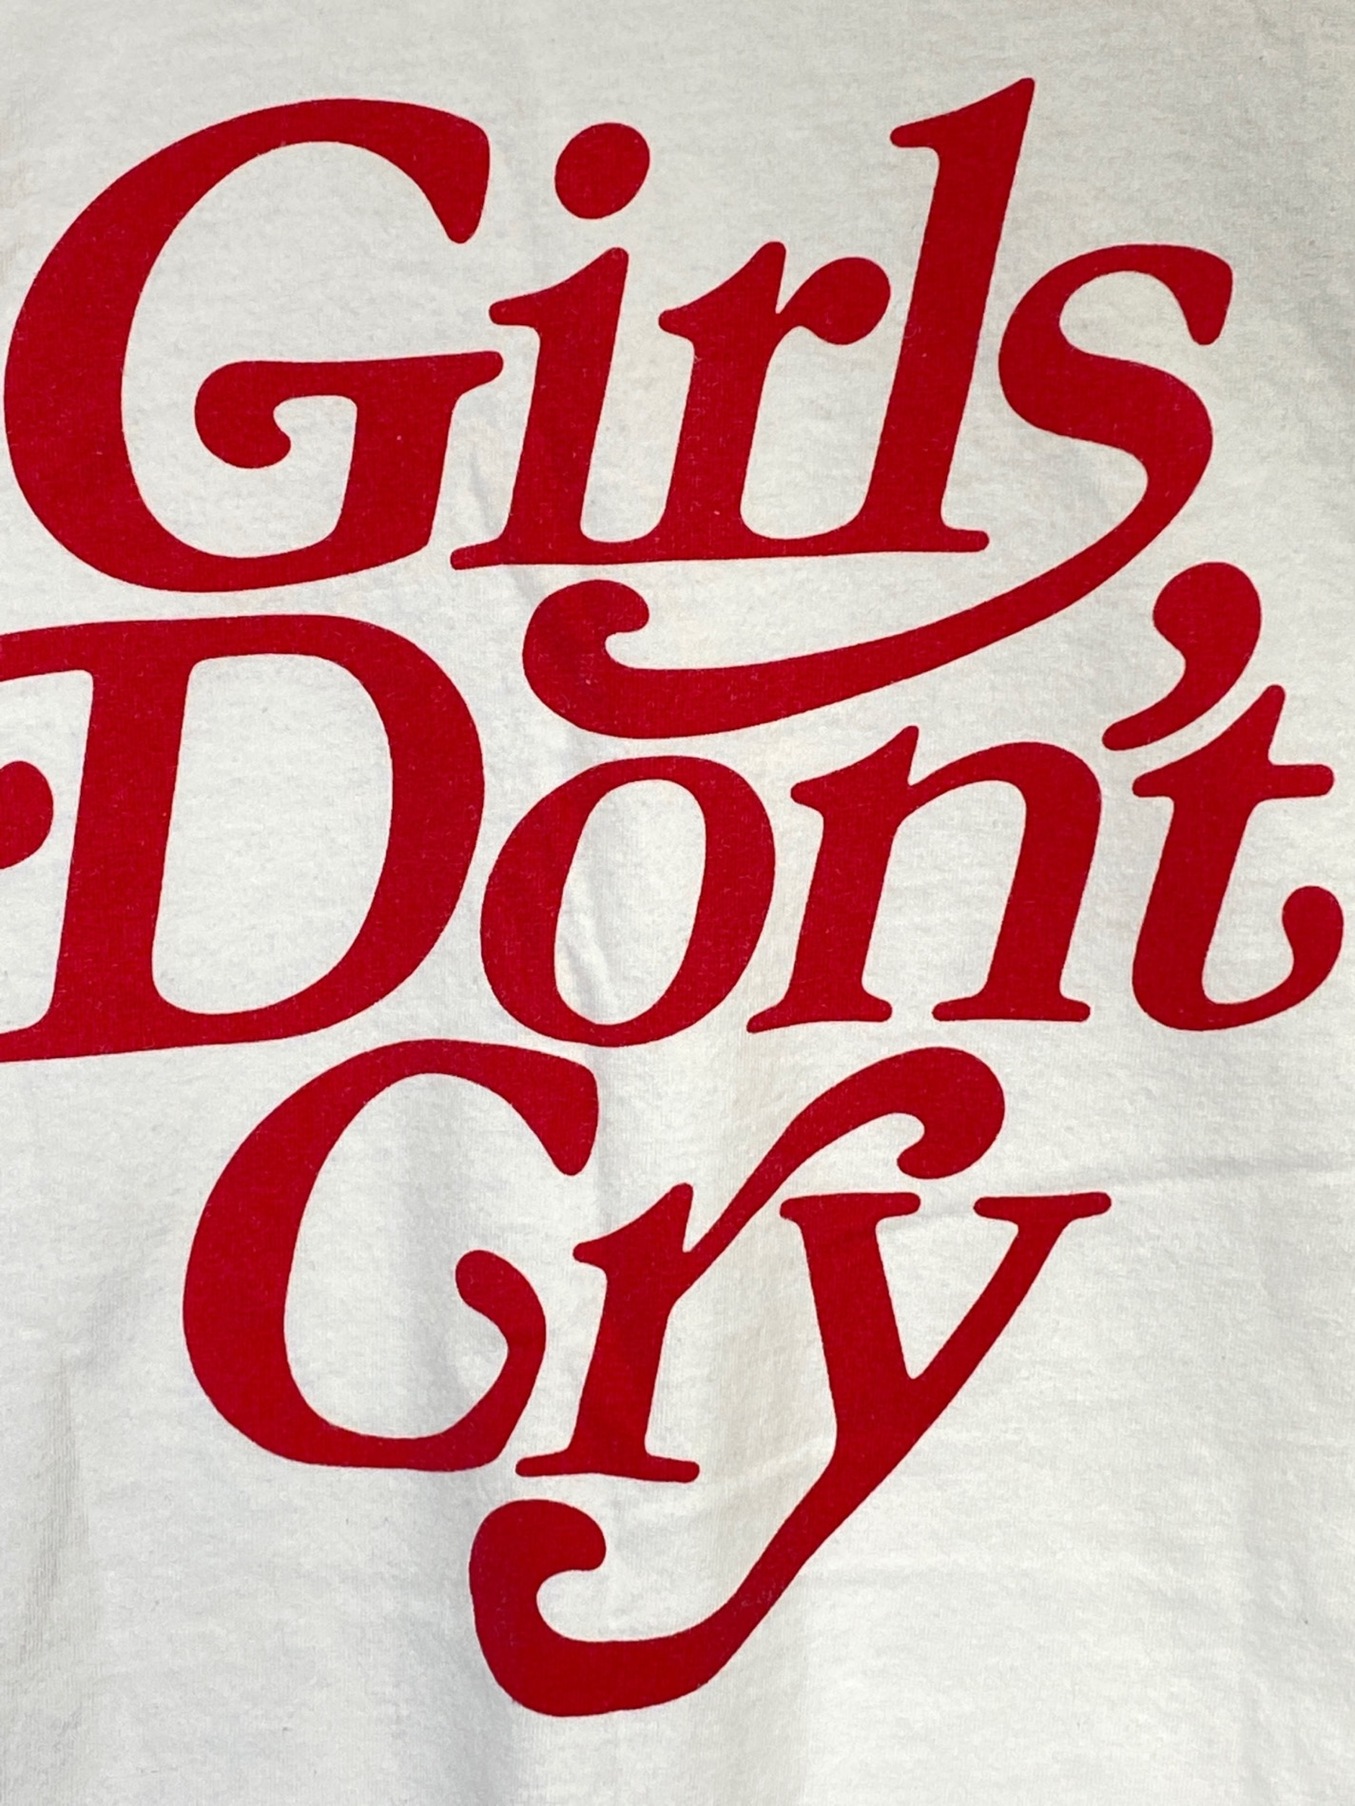 GIRLS DON'T CRY (ガールズドントクライ) 長袖Tシャツ ホワイト サイズ:L